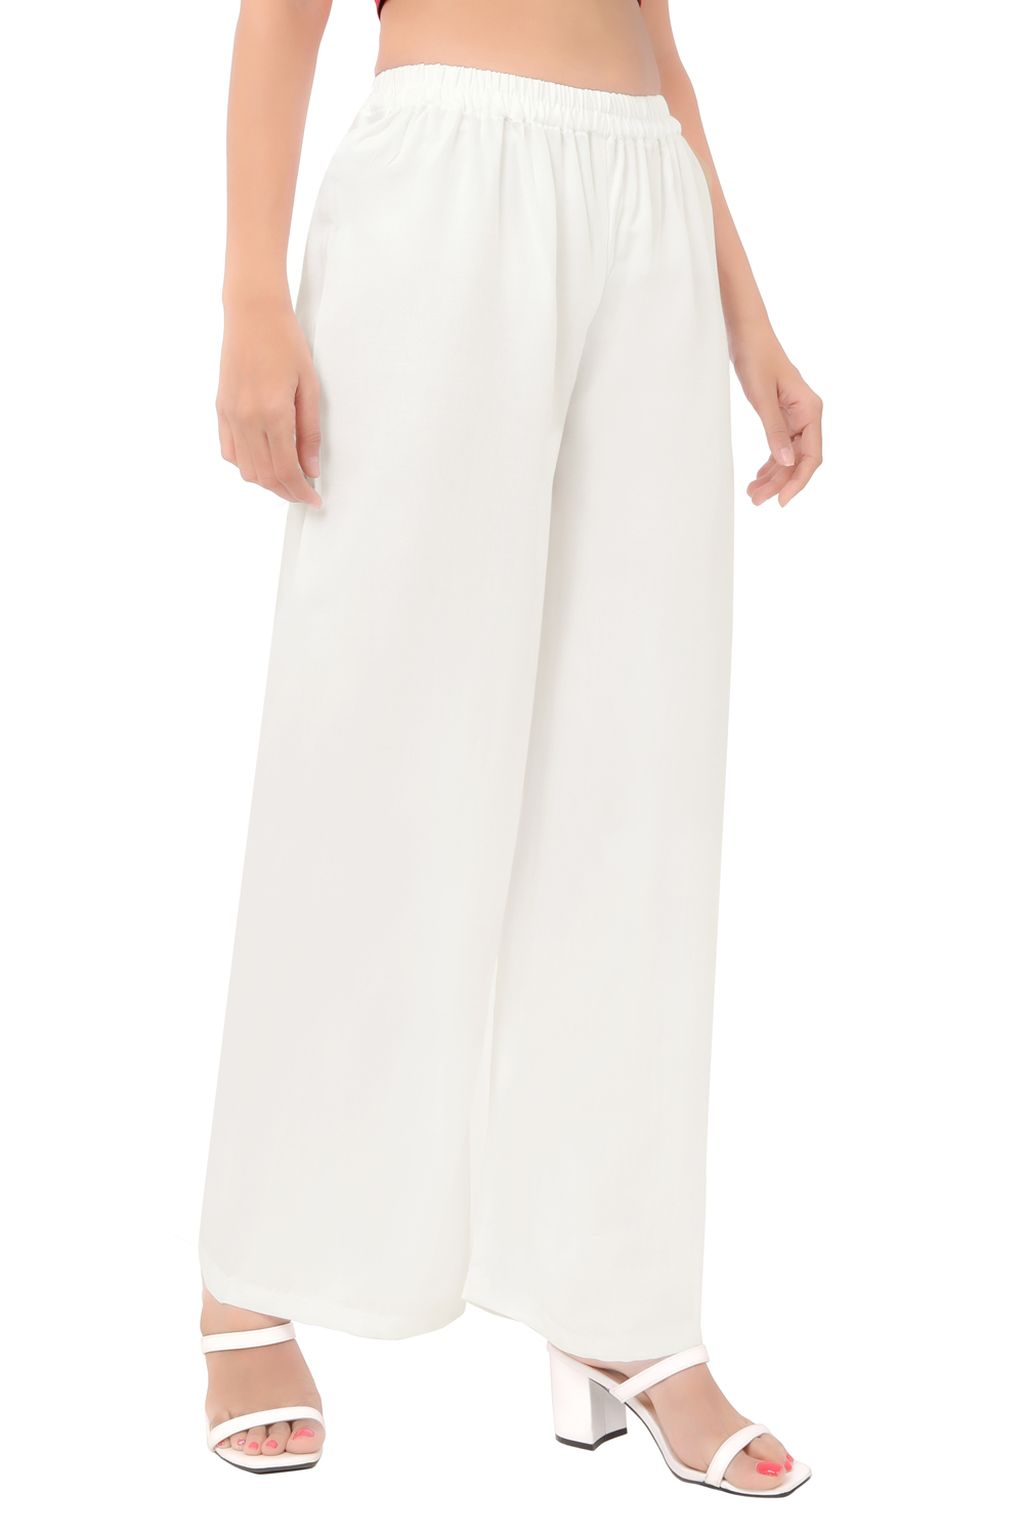 Amazon.com: White Crepe Pants For Women